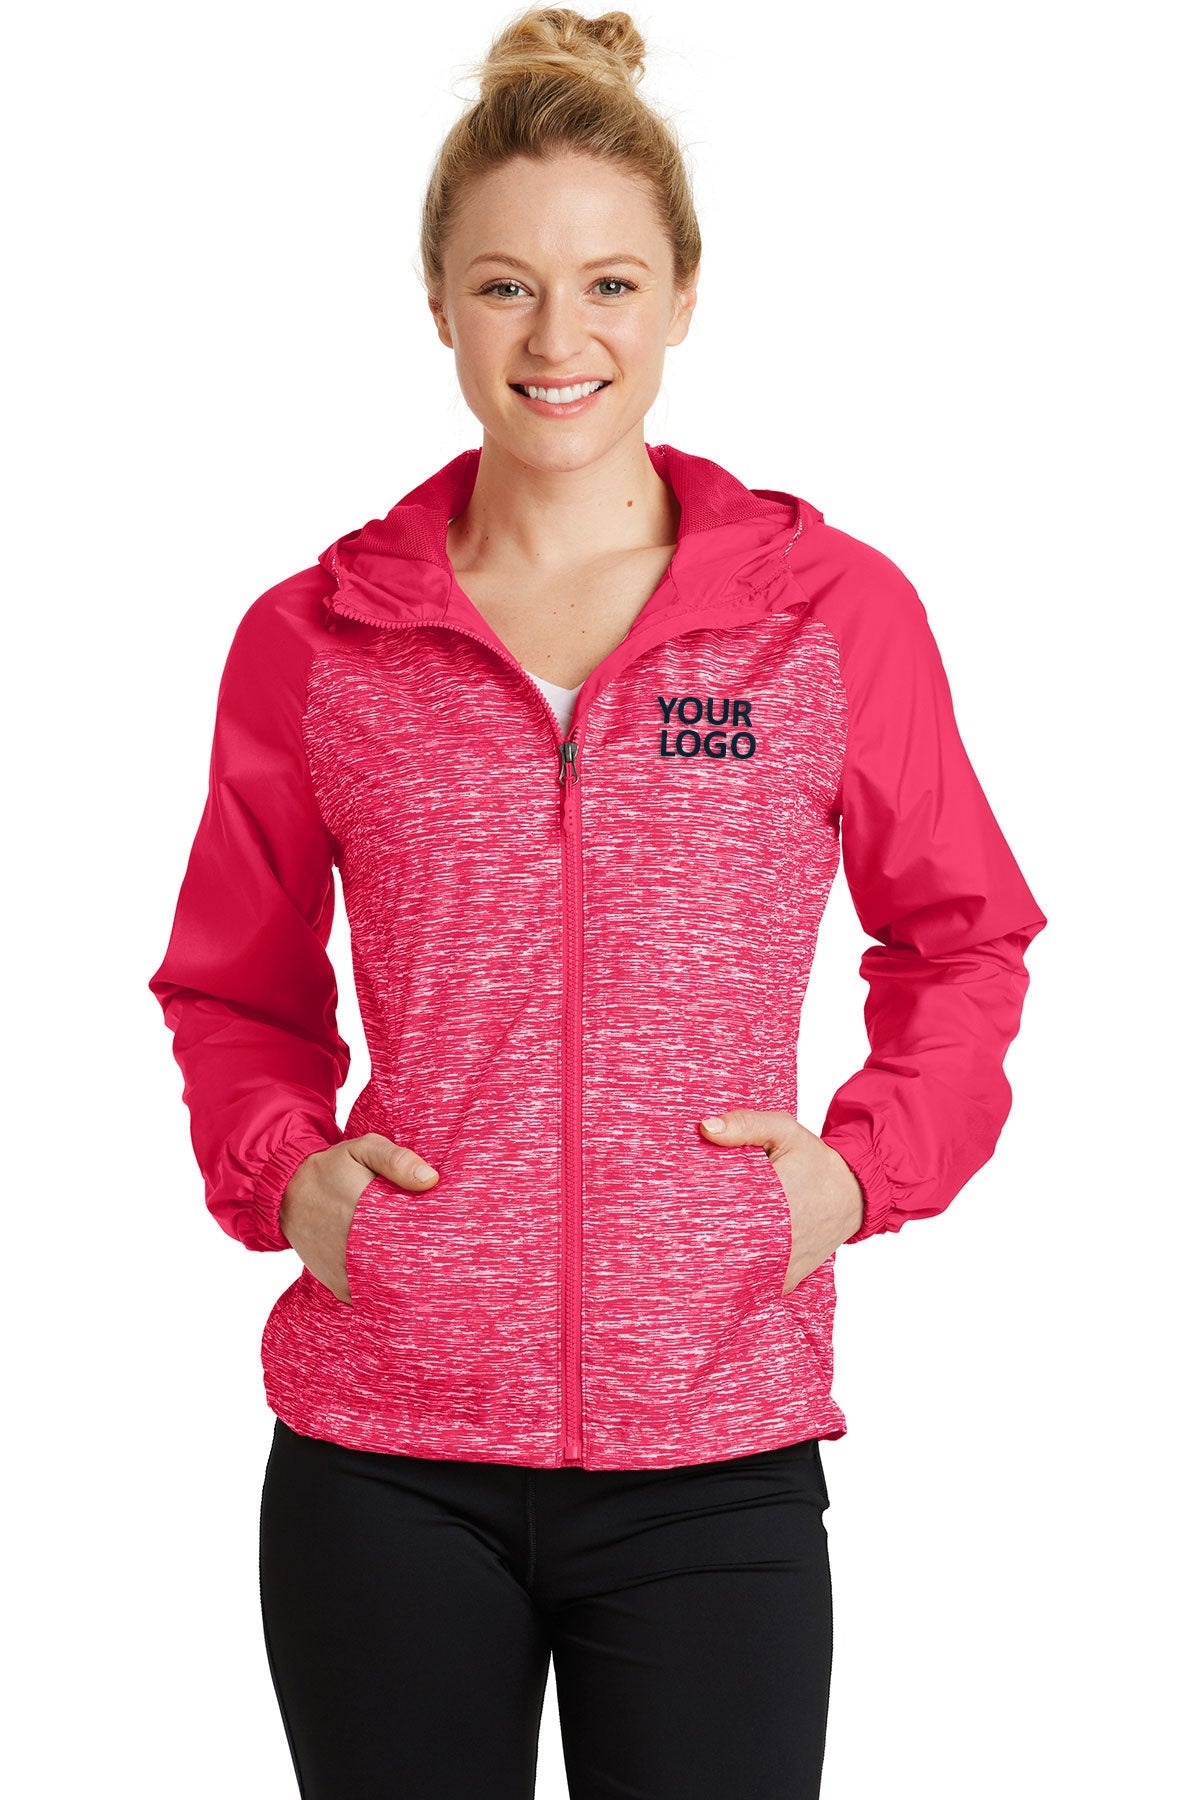 Sport-Tek Pink Raspberry Heather/ Pink Raspberry LST40 company logo jackets